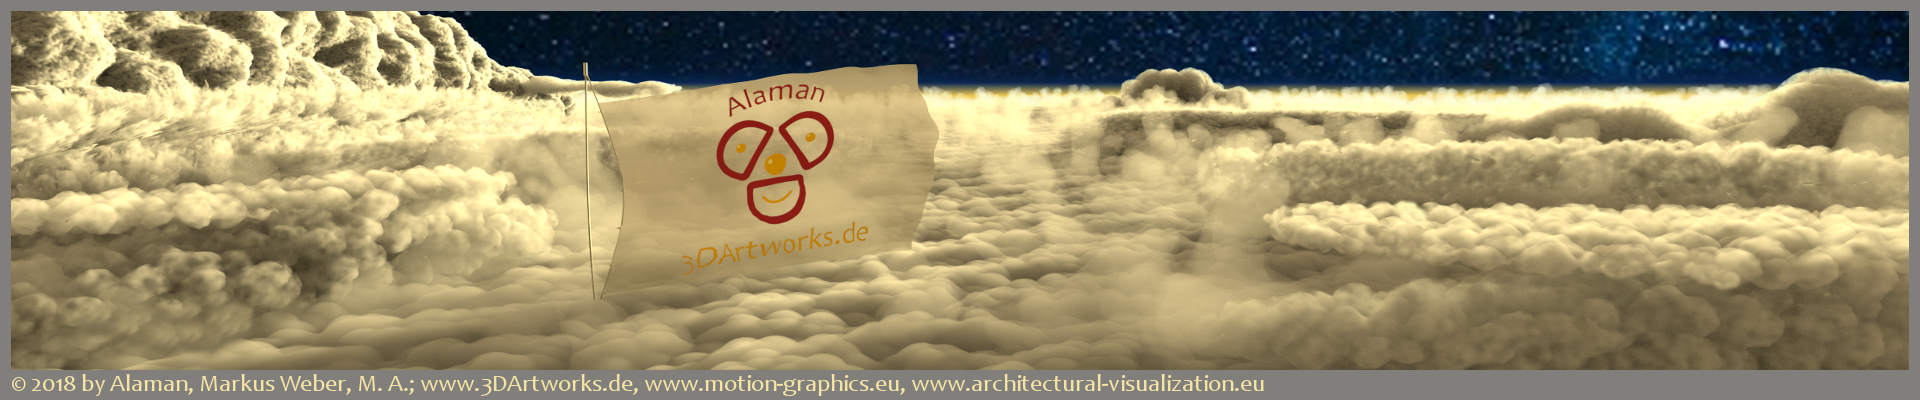 Fahne mit dem Alaman 3D Artworks Logo vor Wolken